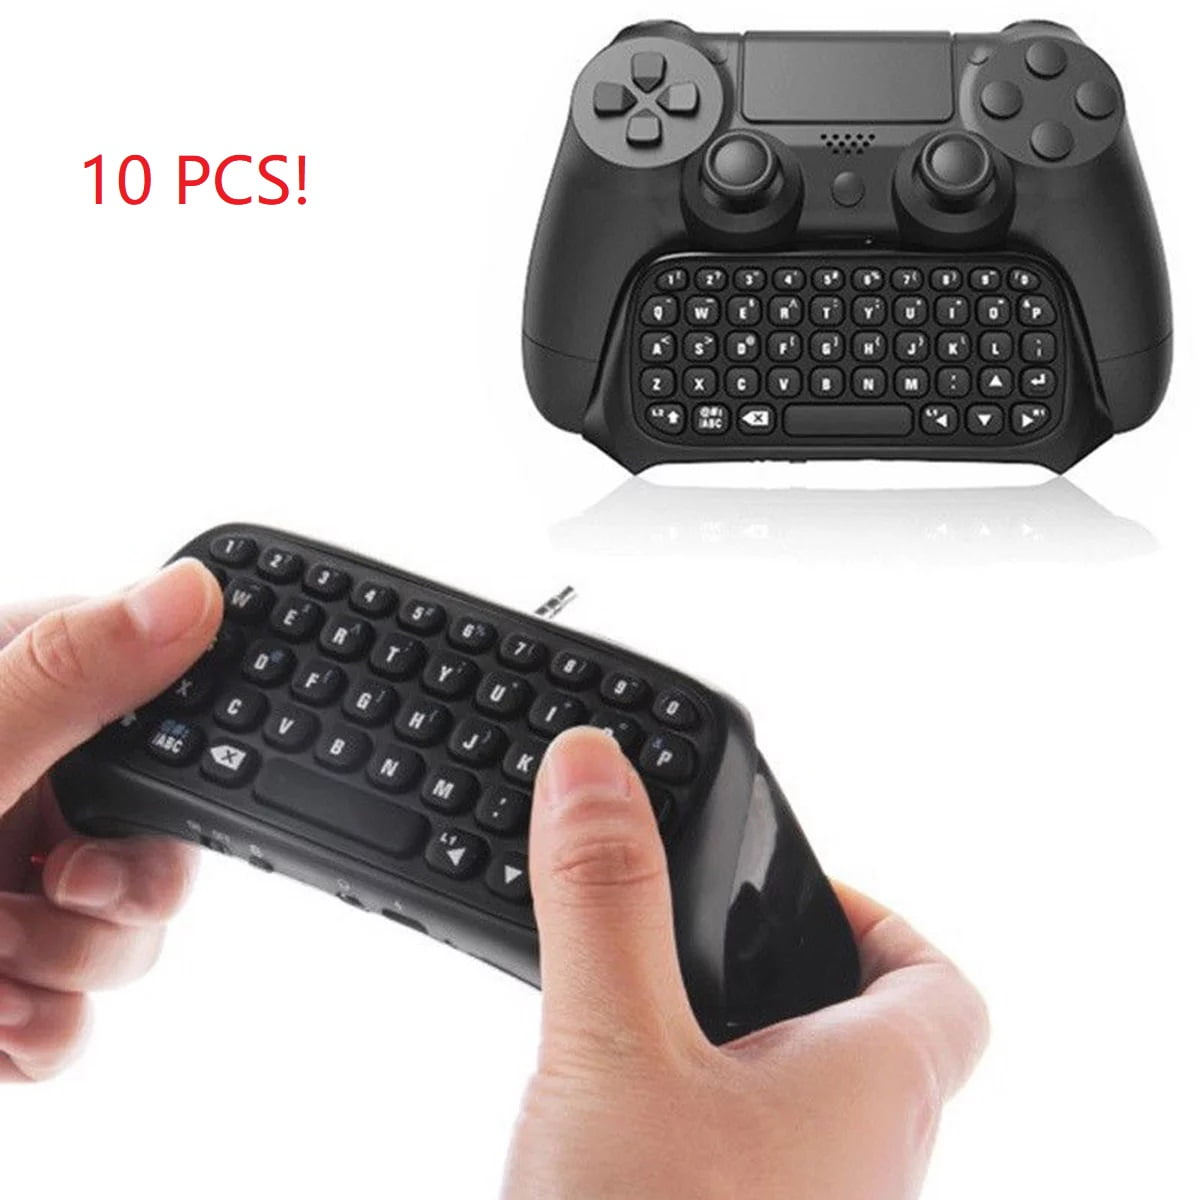 10 PCS! Wireless Bluetooth Keyboard Mini Gaming Keyboard for Playstation 4  PS4 Keypad Chatpad Controller Gaming Keypad